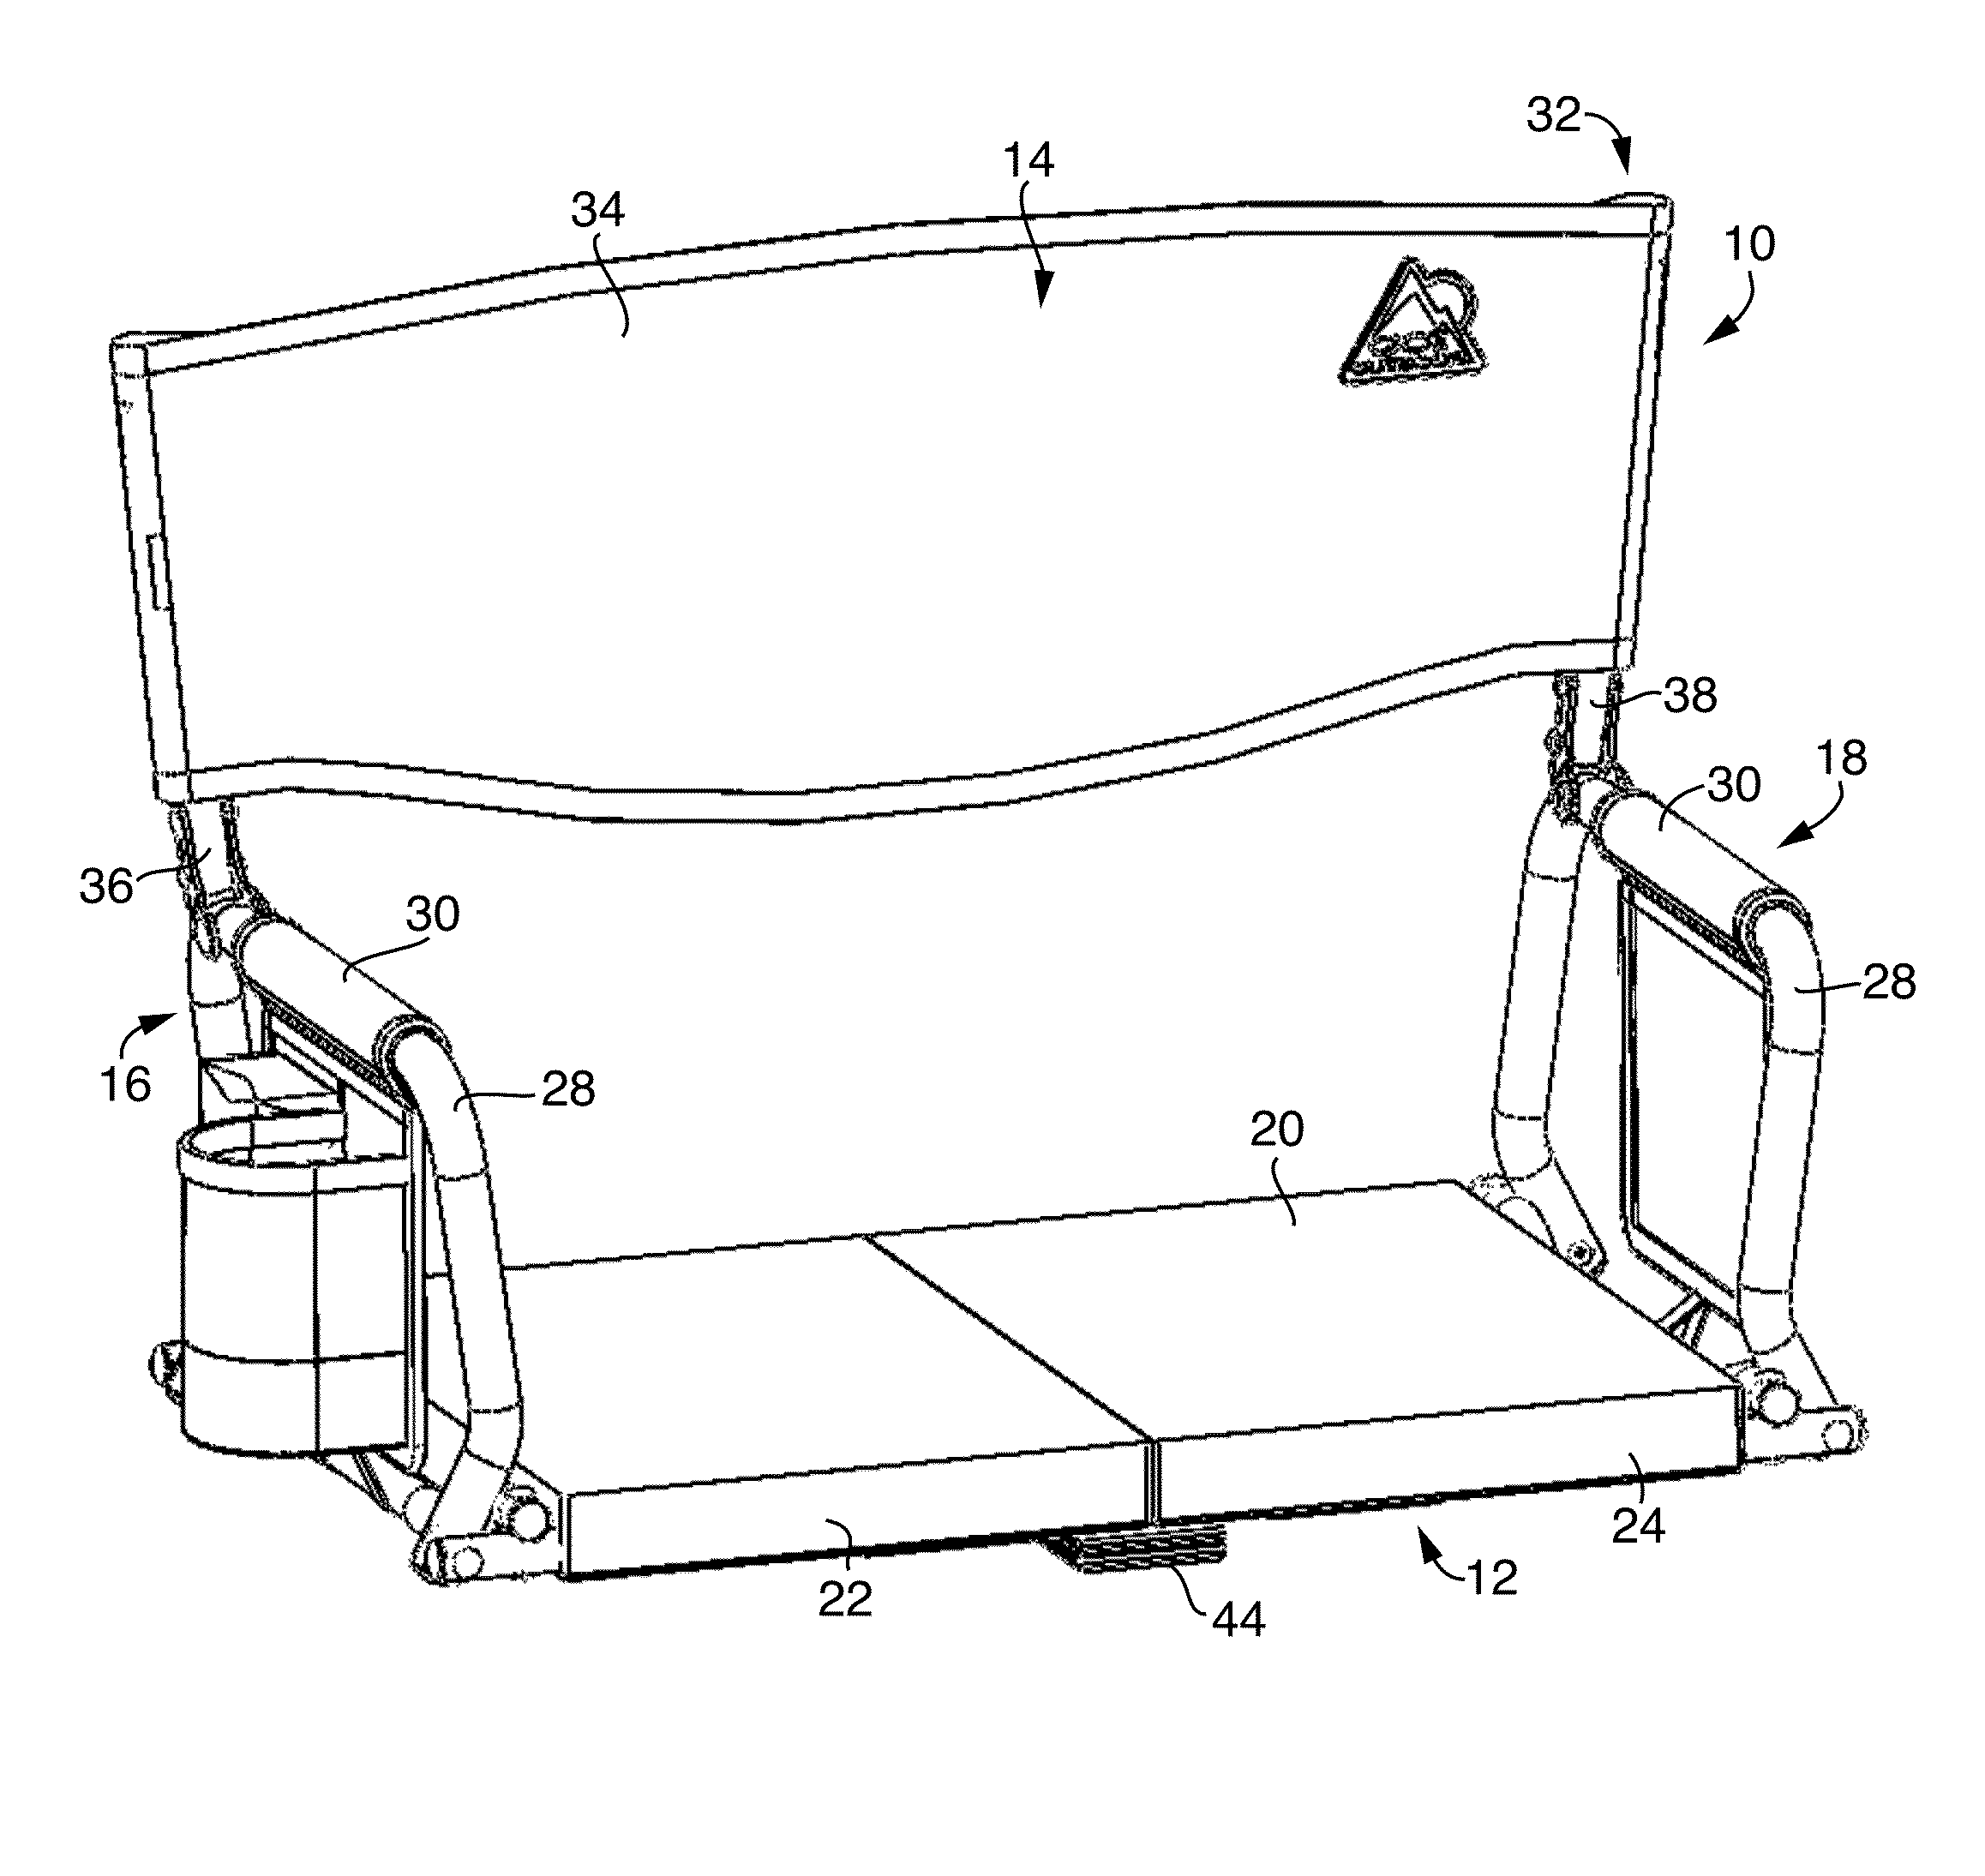 Portable, collapsible stadium seat